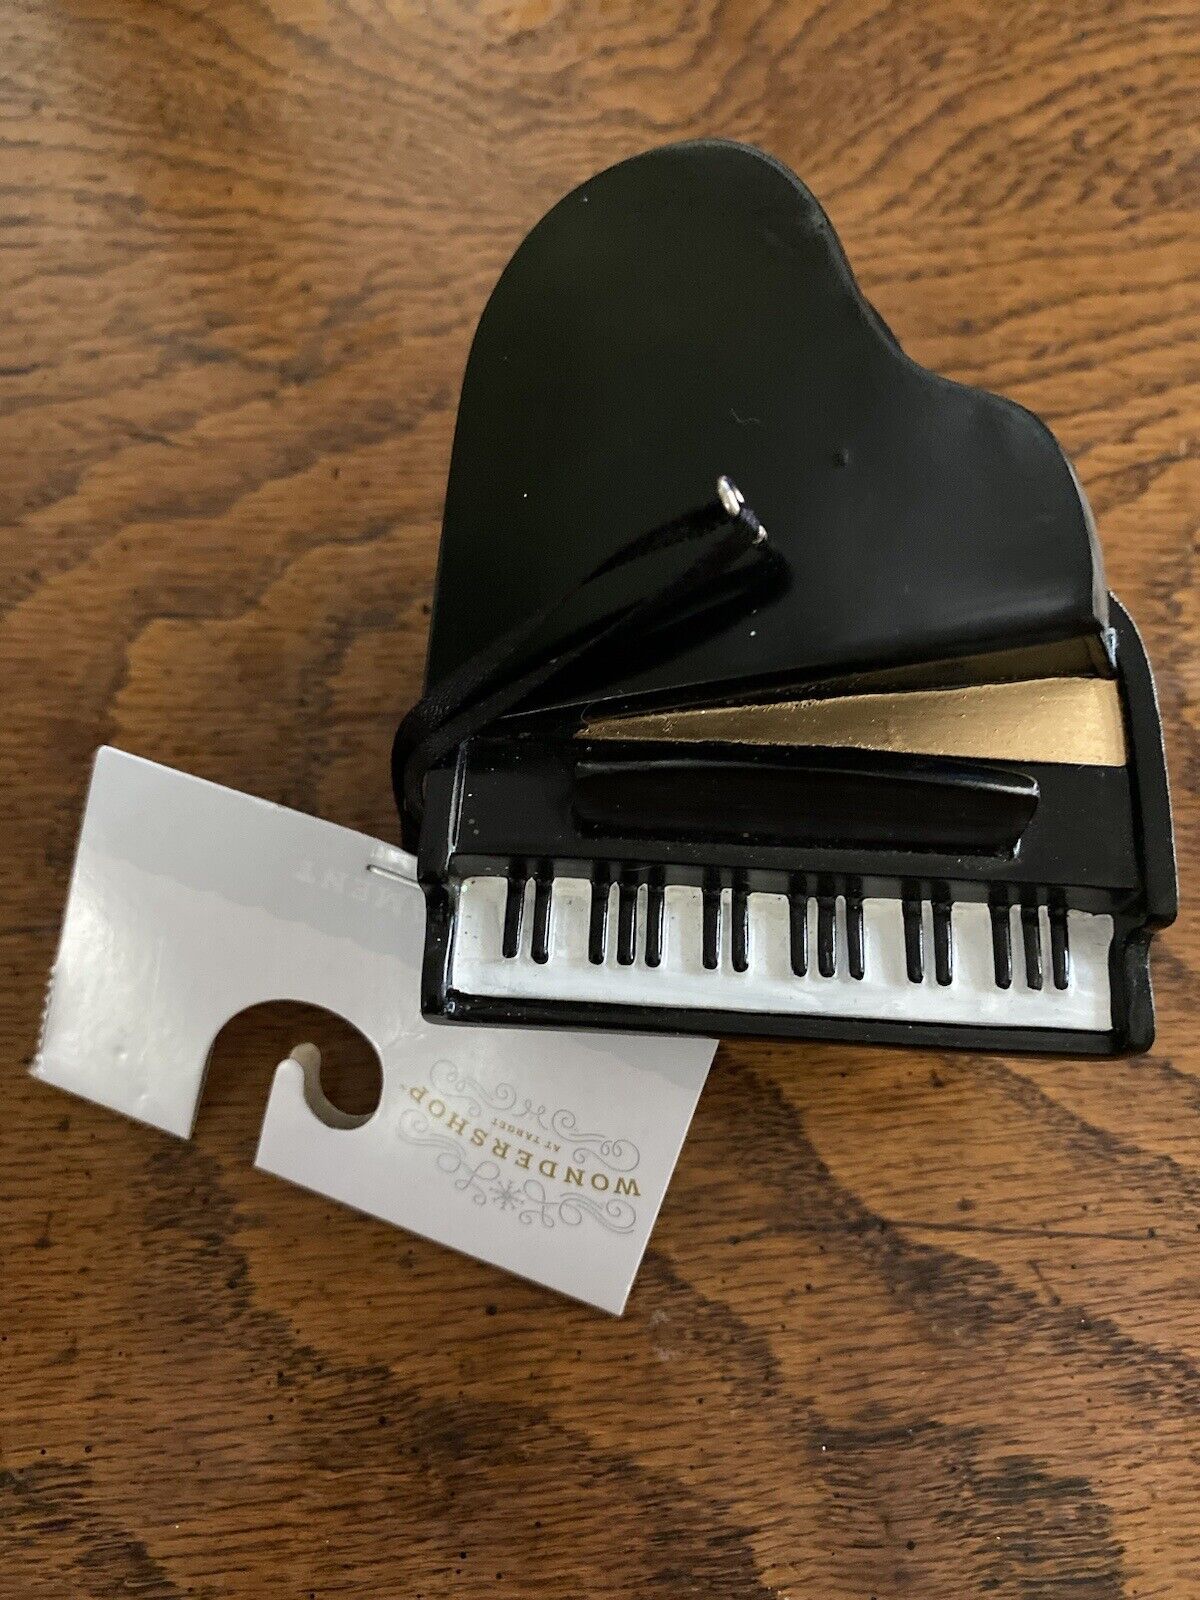 2021 Target Brand Piano Ornament 